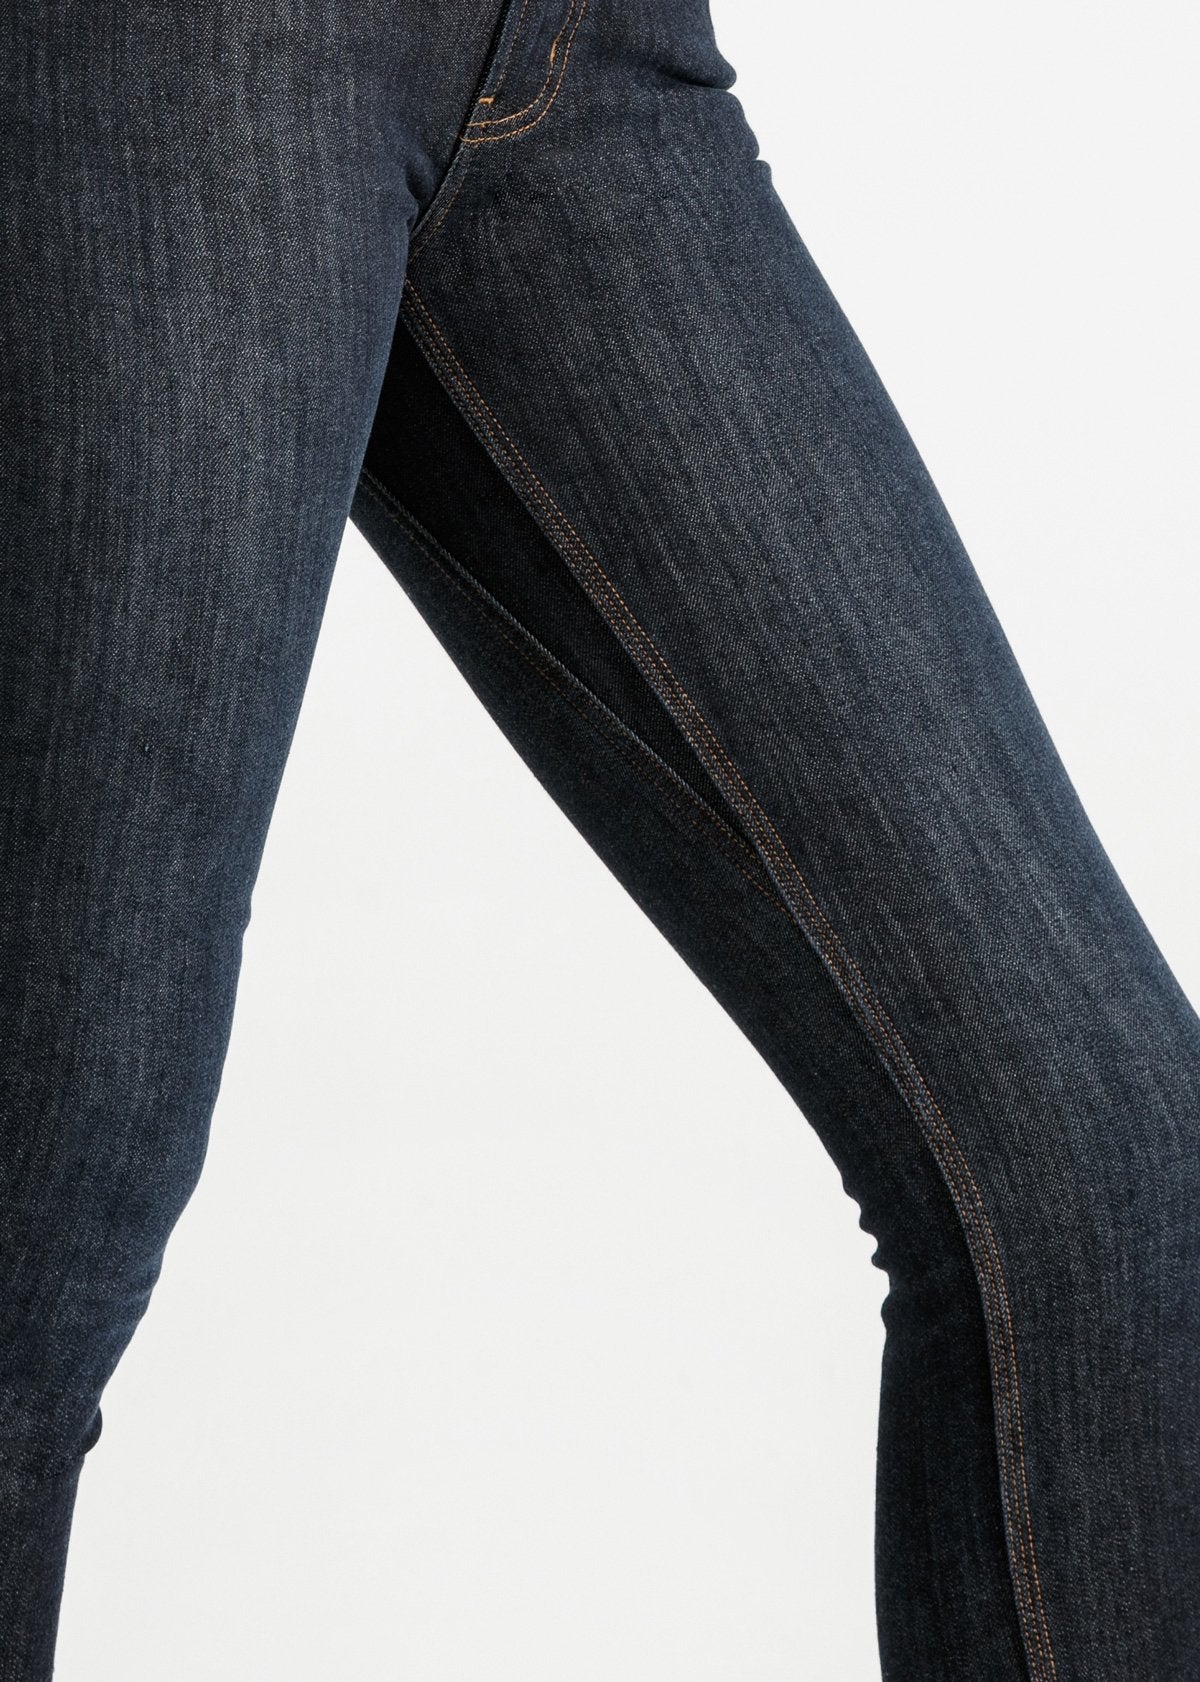 KDF Womens Fleece Lined Jeans Women Thermal Winter Jeans Warm Stretch Denim Fleece  Lined Pants Jeans Black Size 2 : : Clothing, Shoes & Accessories